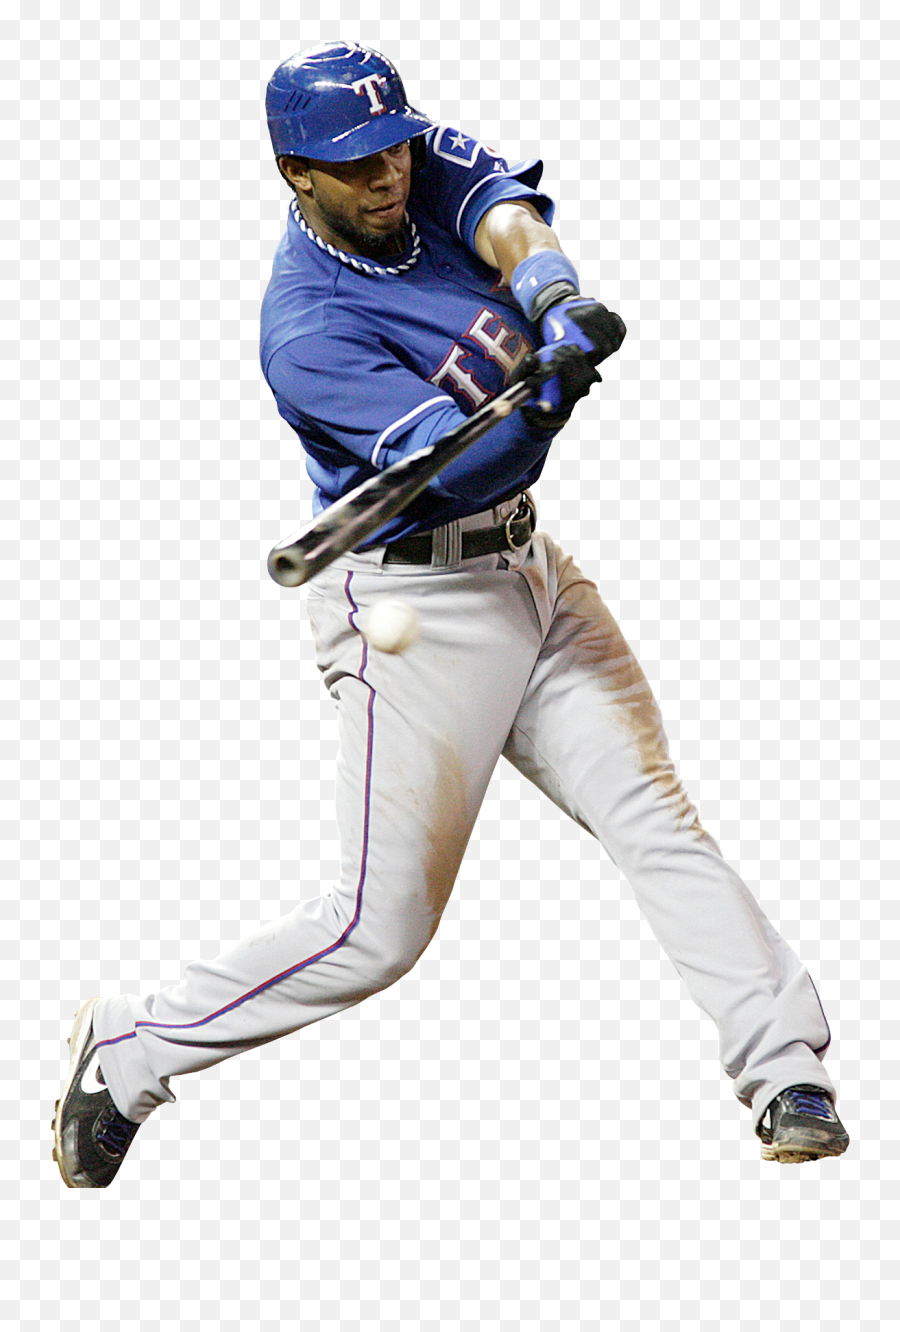 Download Baseball Player Png Image For Free - Texas Rangers,Baseball Player Png